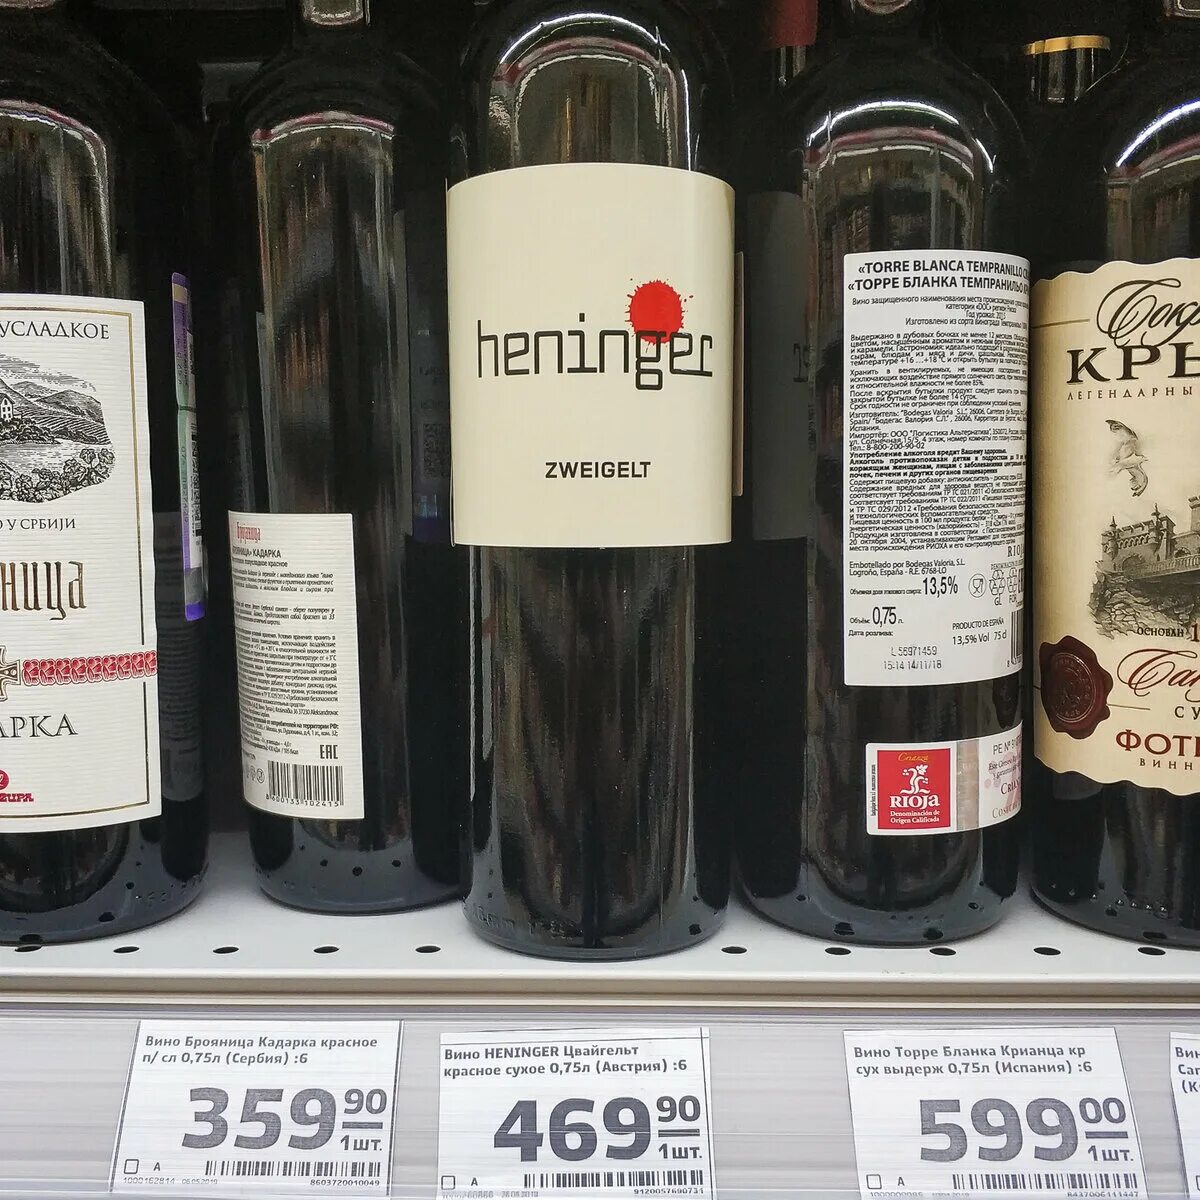 Вино Австрия Henninger. Вино Цвайгельт Австрия. Австрийское вино магнит. Красное австрийское вино в магните.